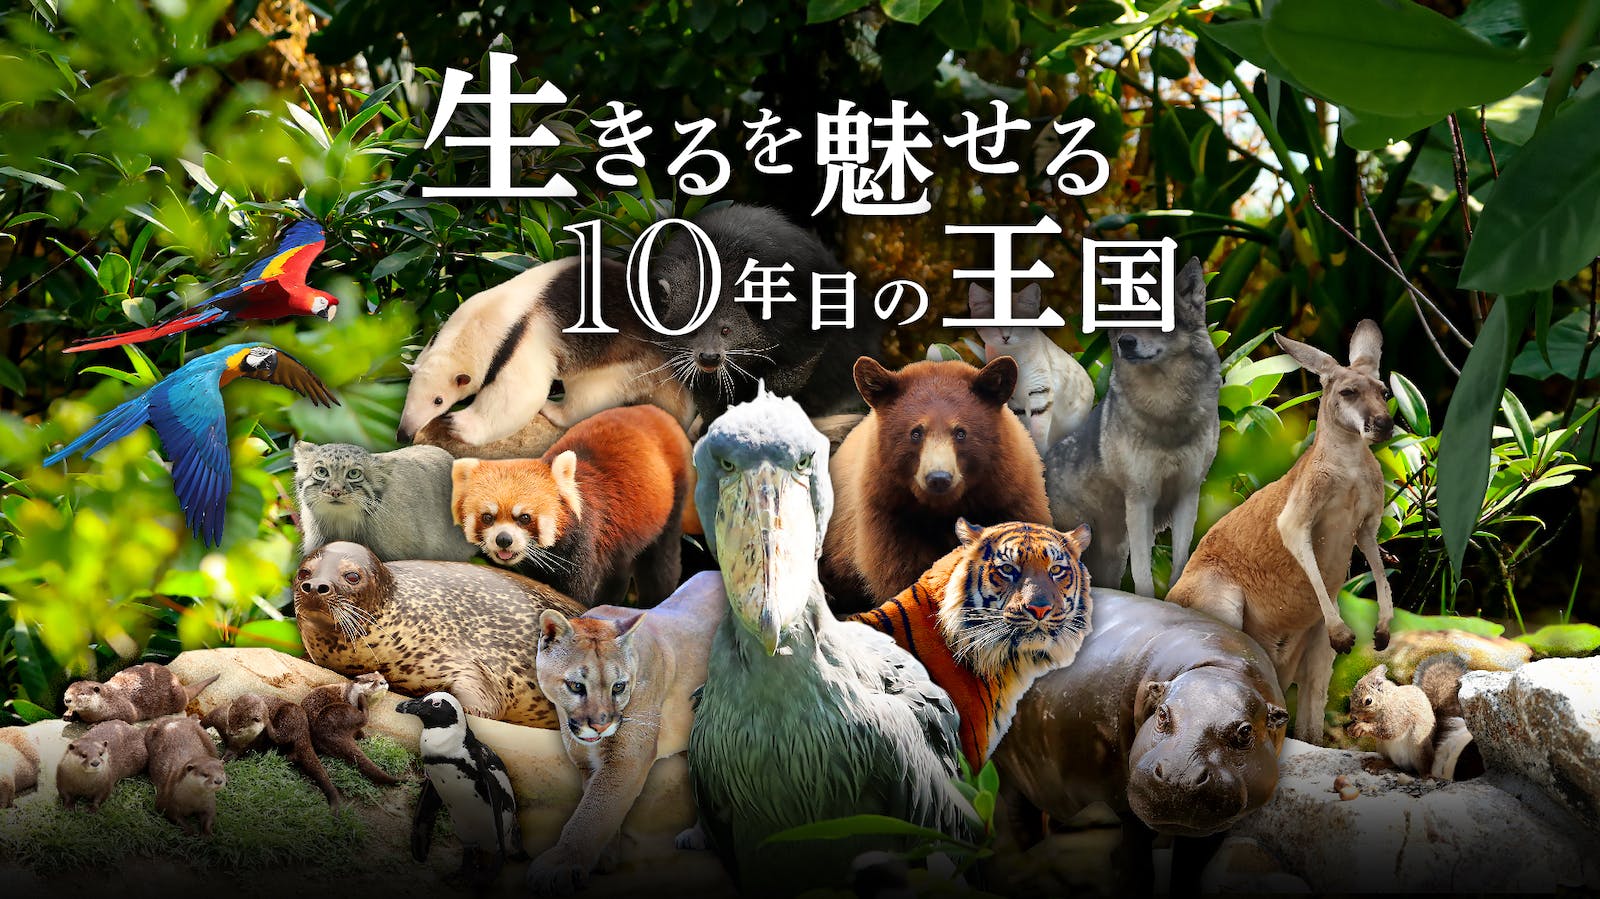 Animal kingdom banner